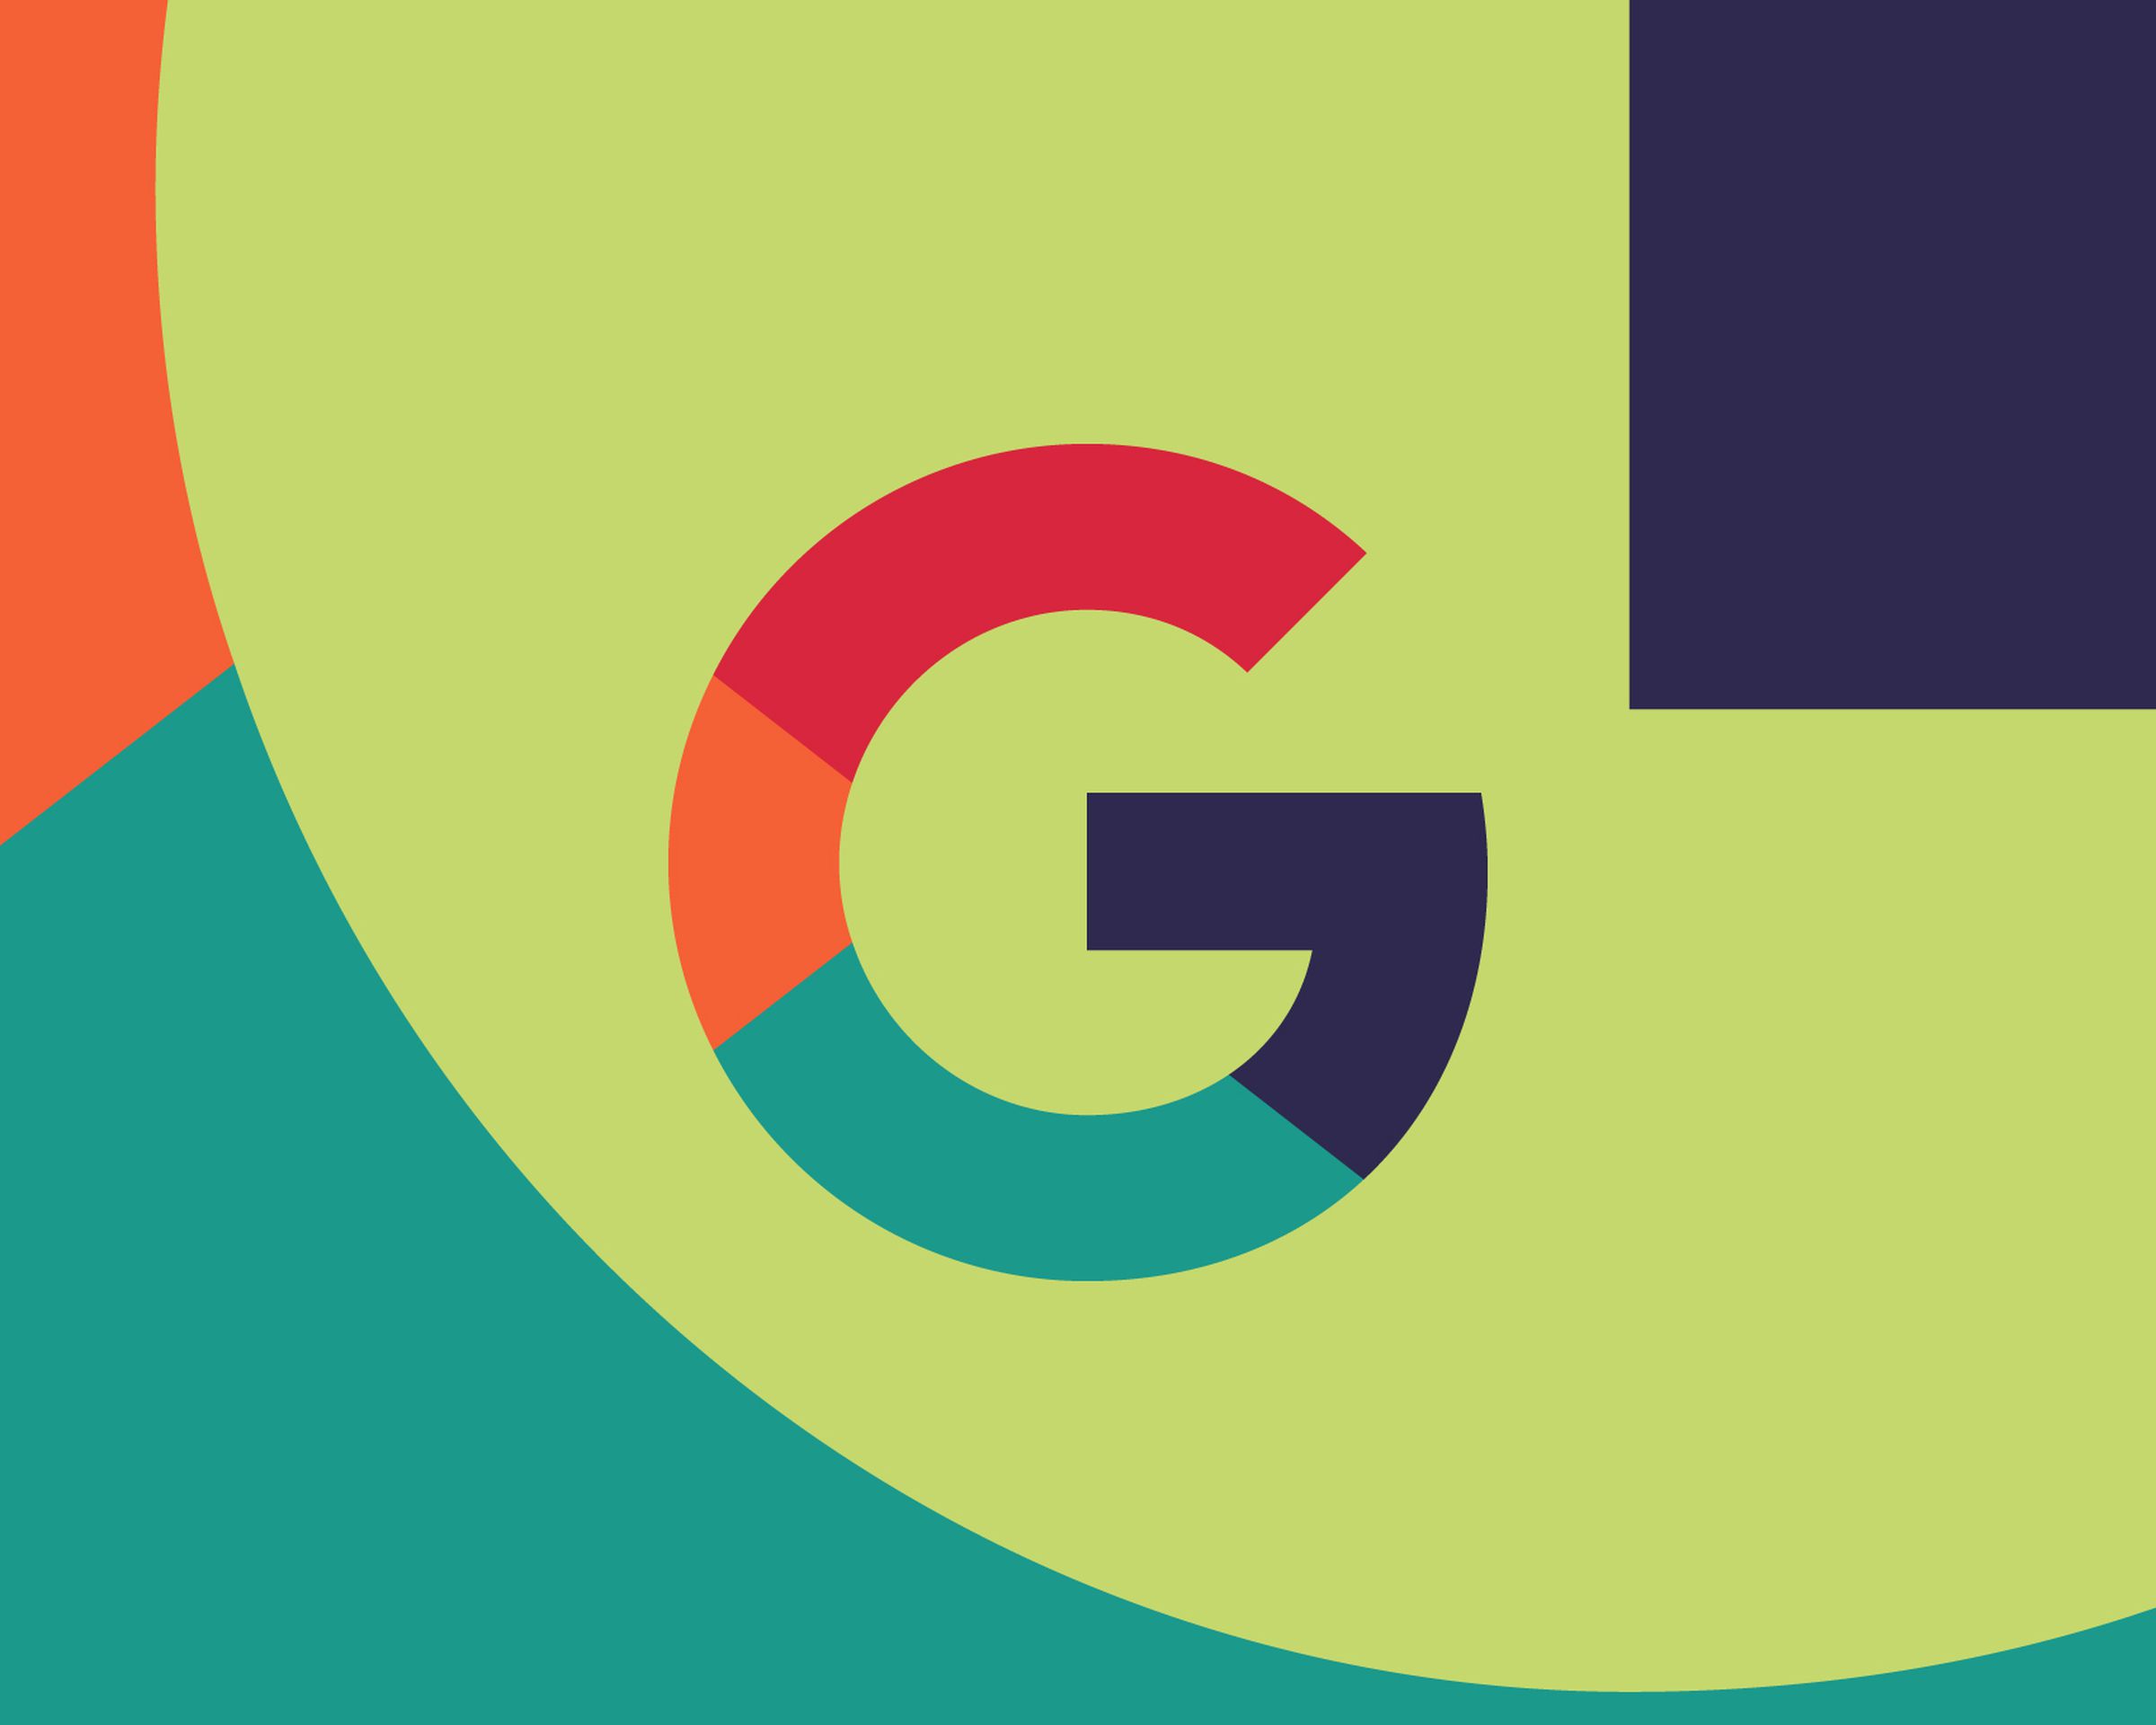 An illustration of Google’s multicolor “G” logo